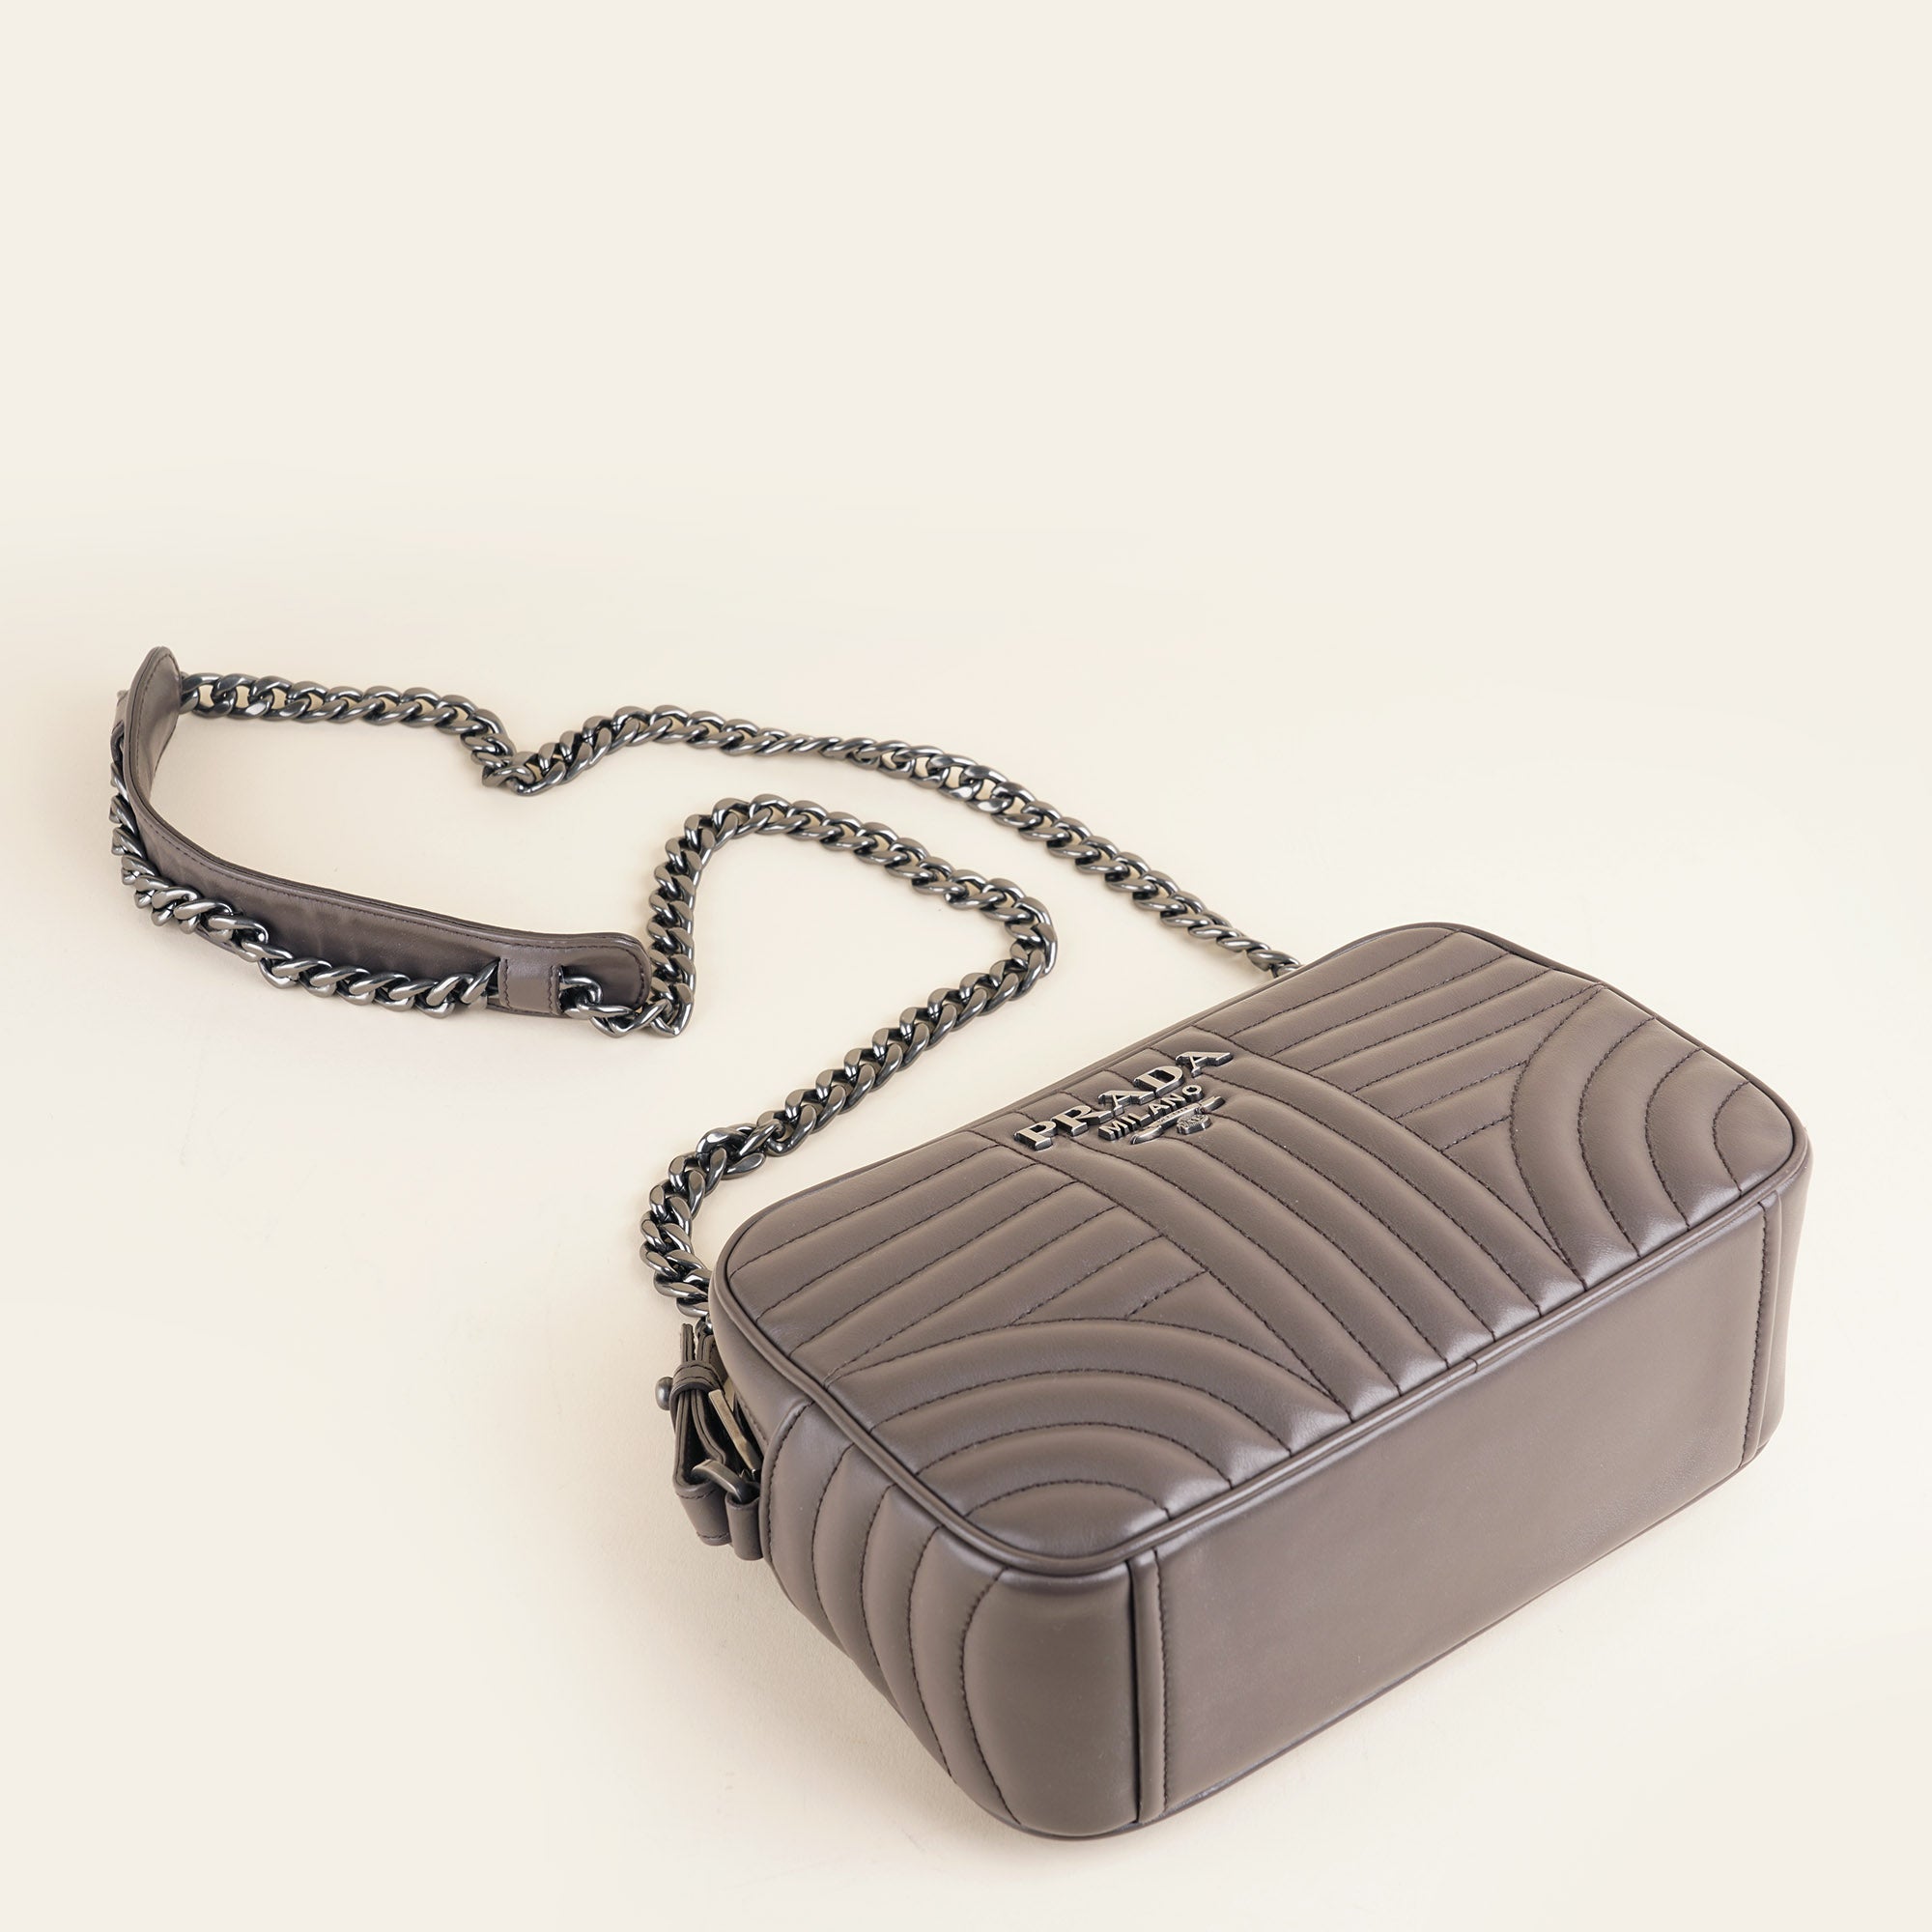 Diagramme Camera Bag - PRADA - Affordable Luxury image